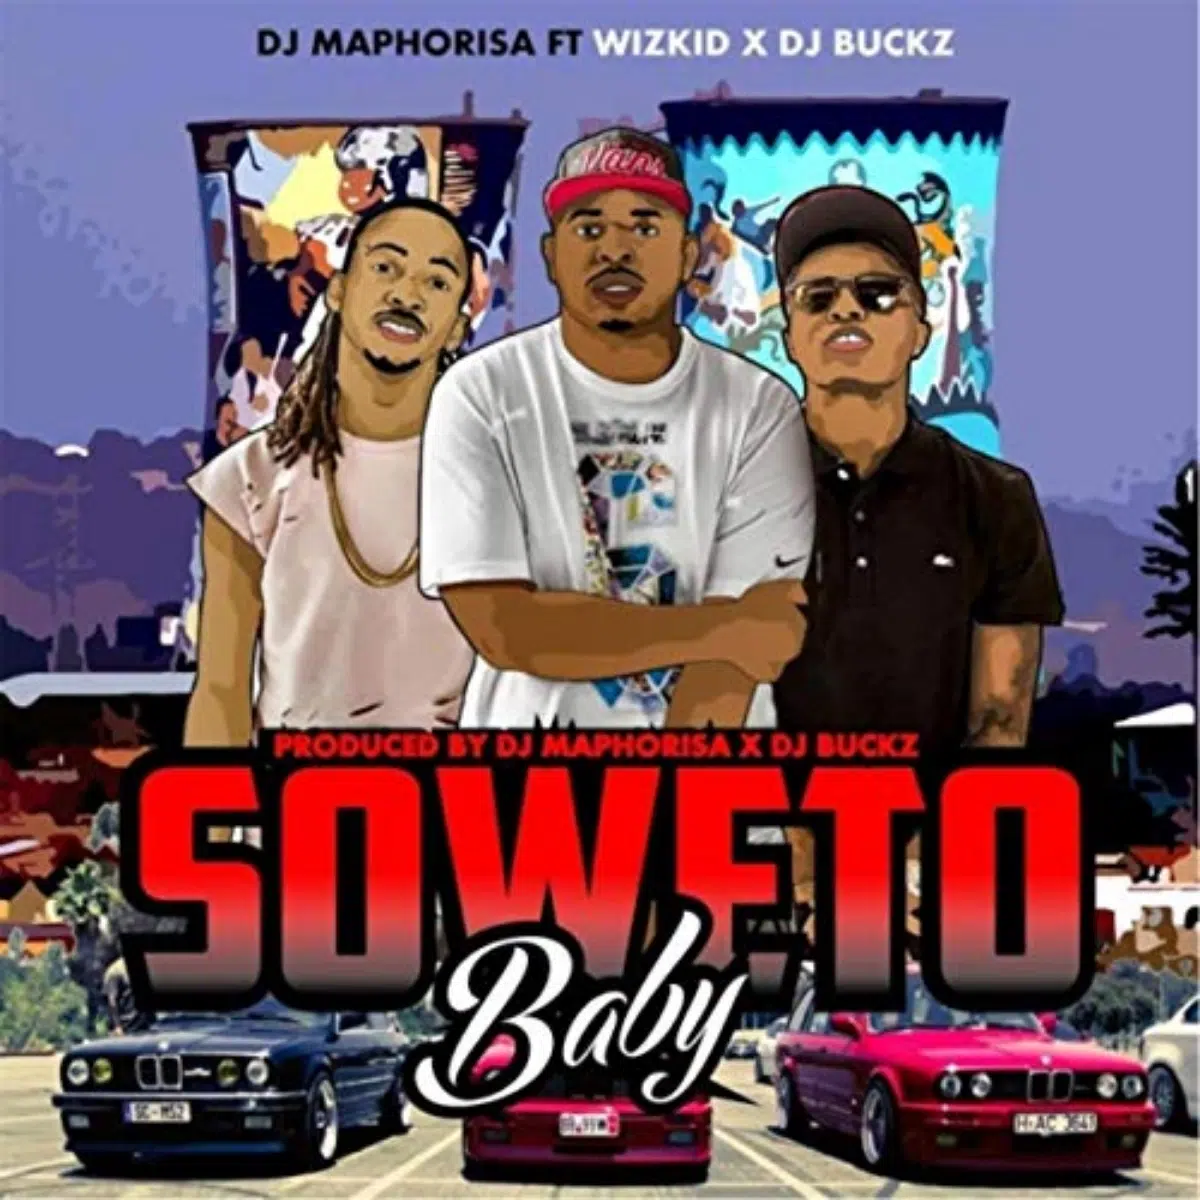 DOWNLOAD: Dj Maphorisa Ft Wizkid & Dj Buckz – “Soweto Baby” Video + Audio Mp3